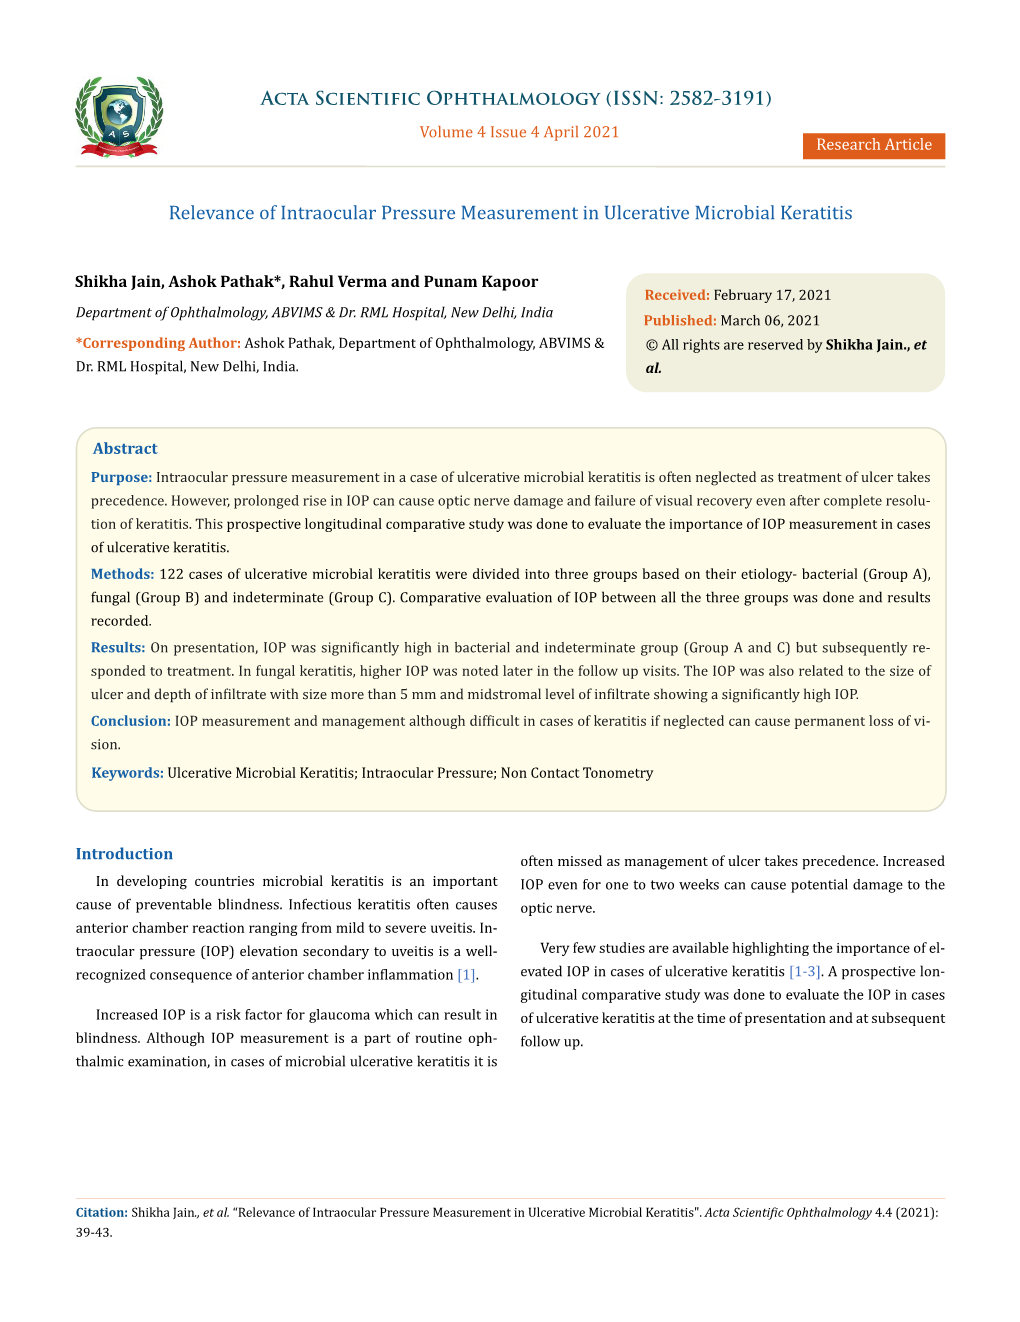 Relevance of Intraocular Pressure Measurement in Ulcerative Microbial Keratitis